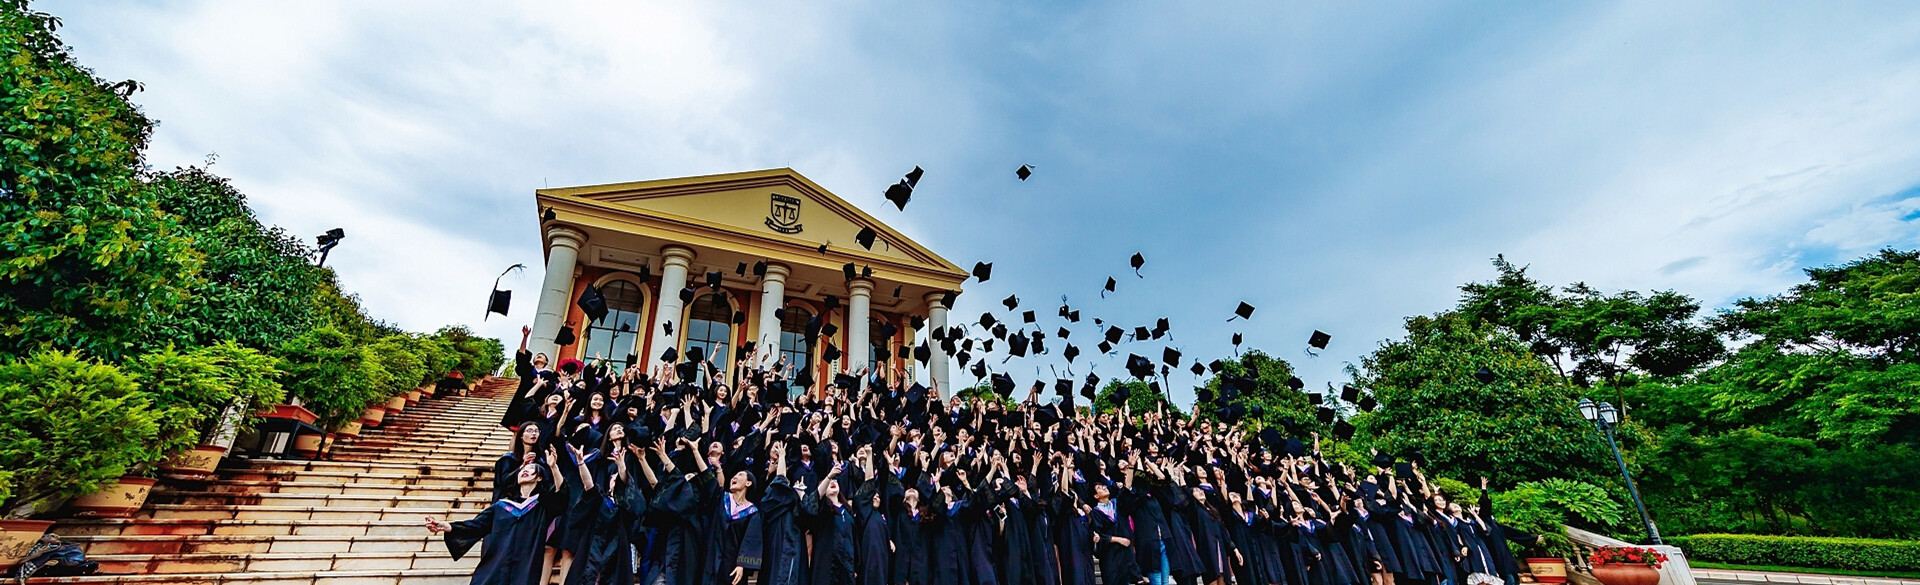 Grand graduation ceremony held at Yunnan University